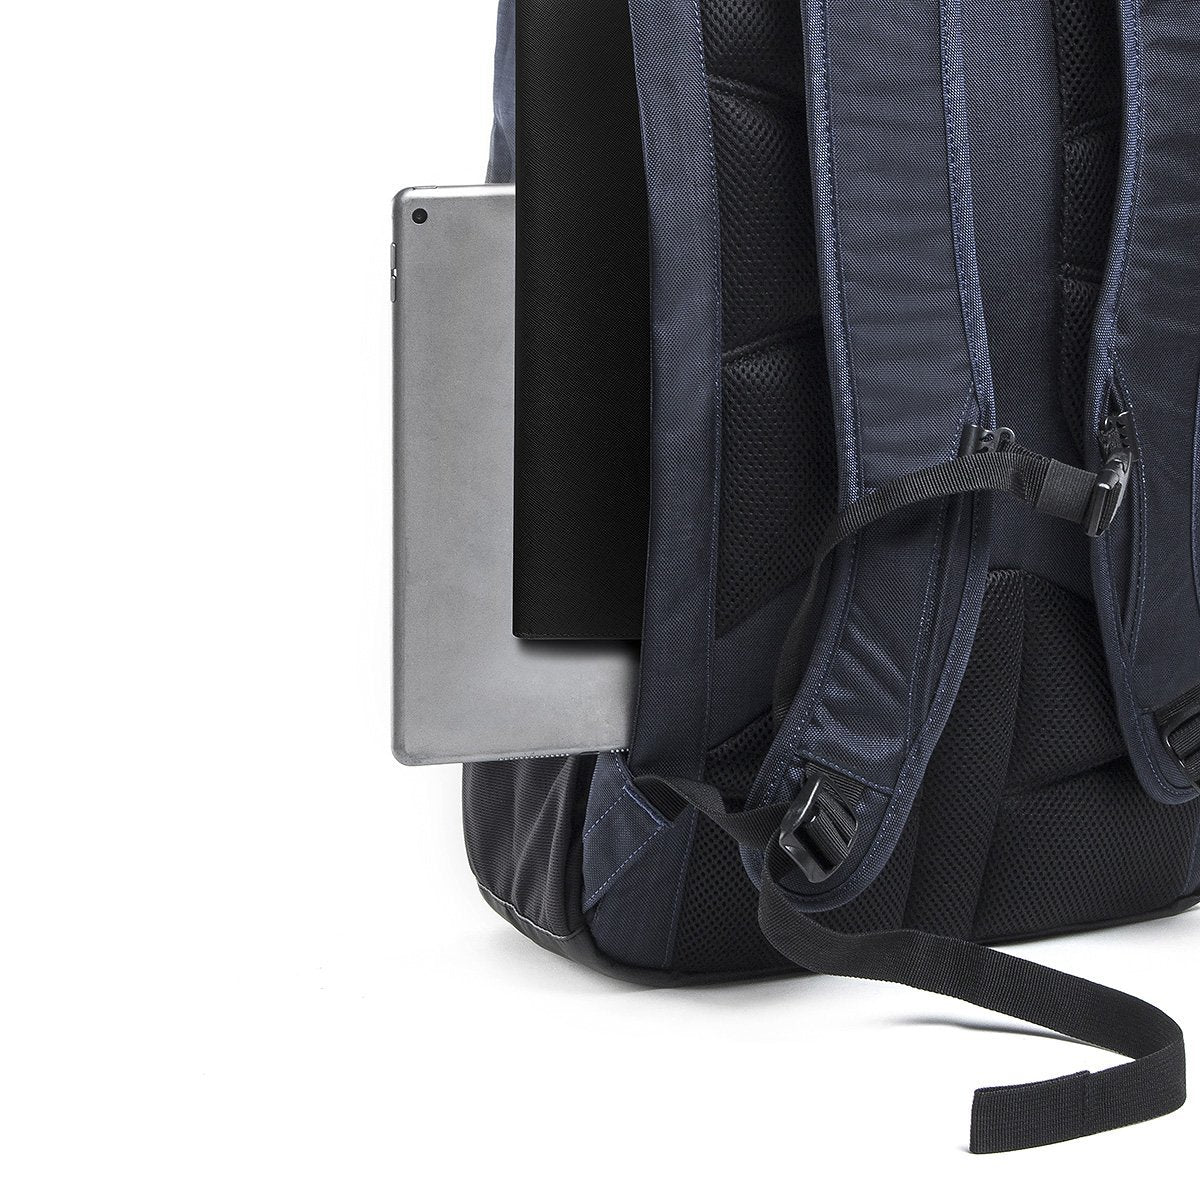 Crumpler BackLoad Backpack 17